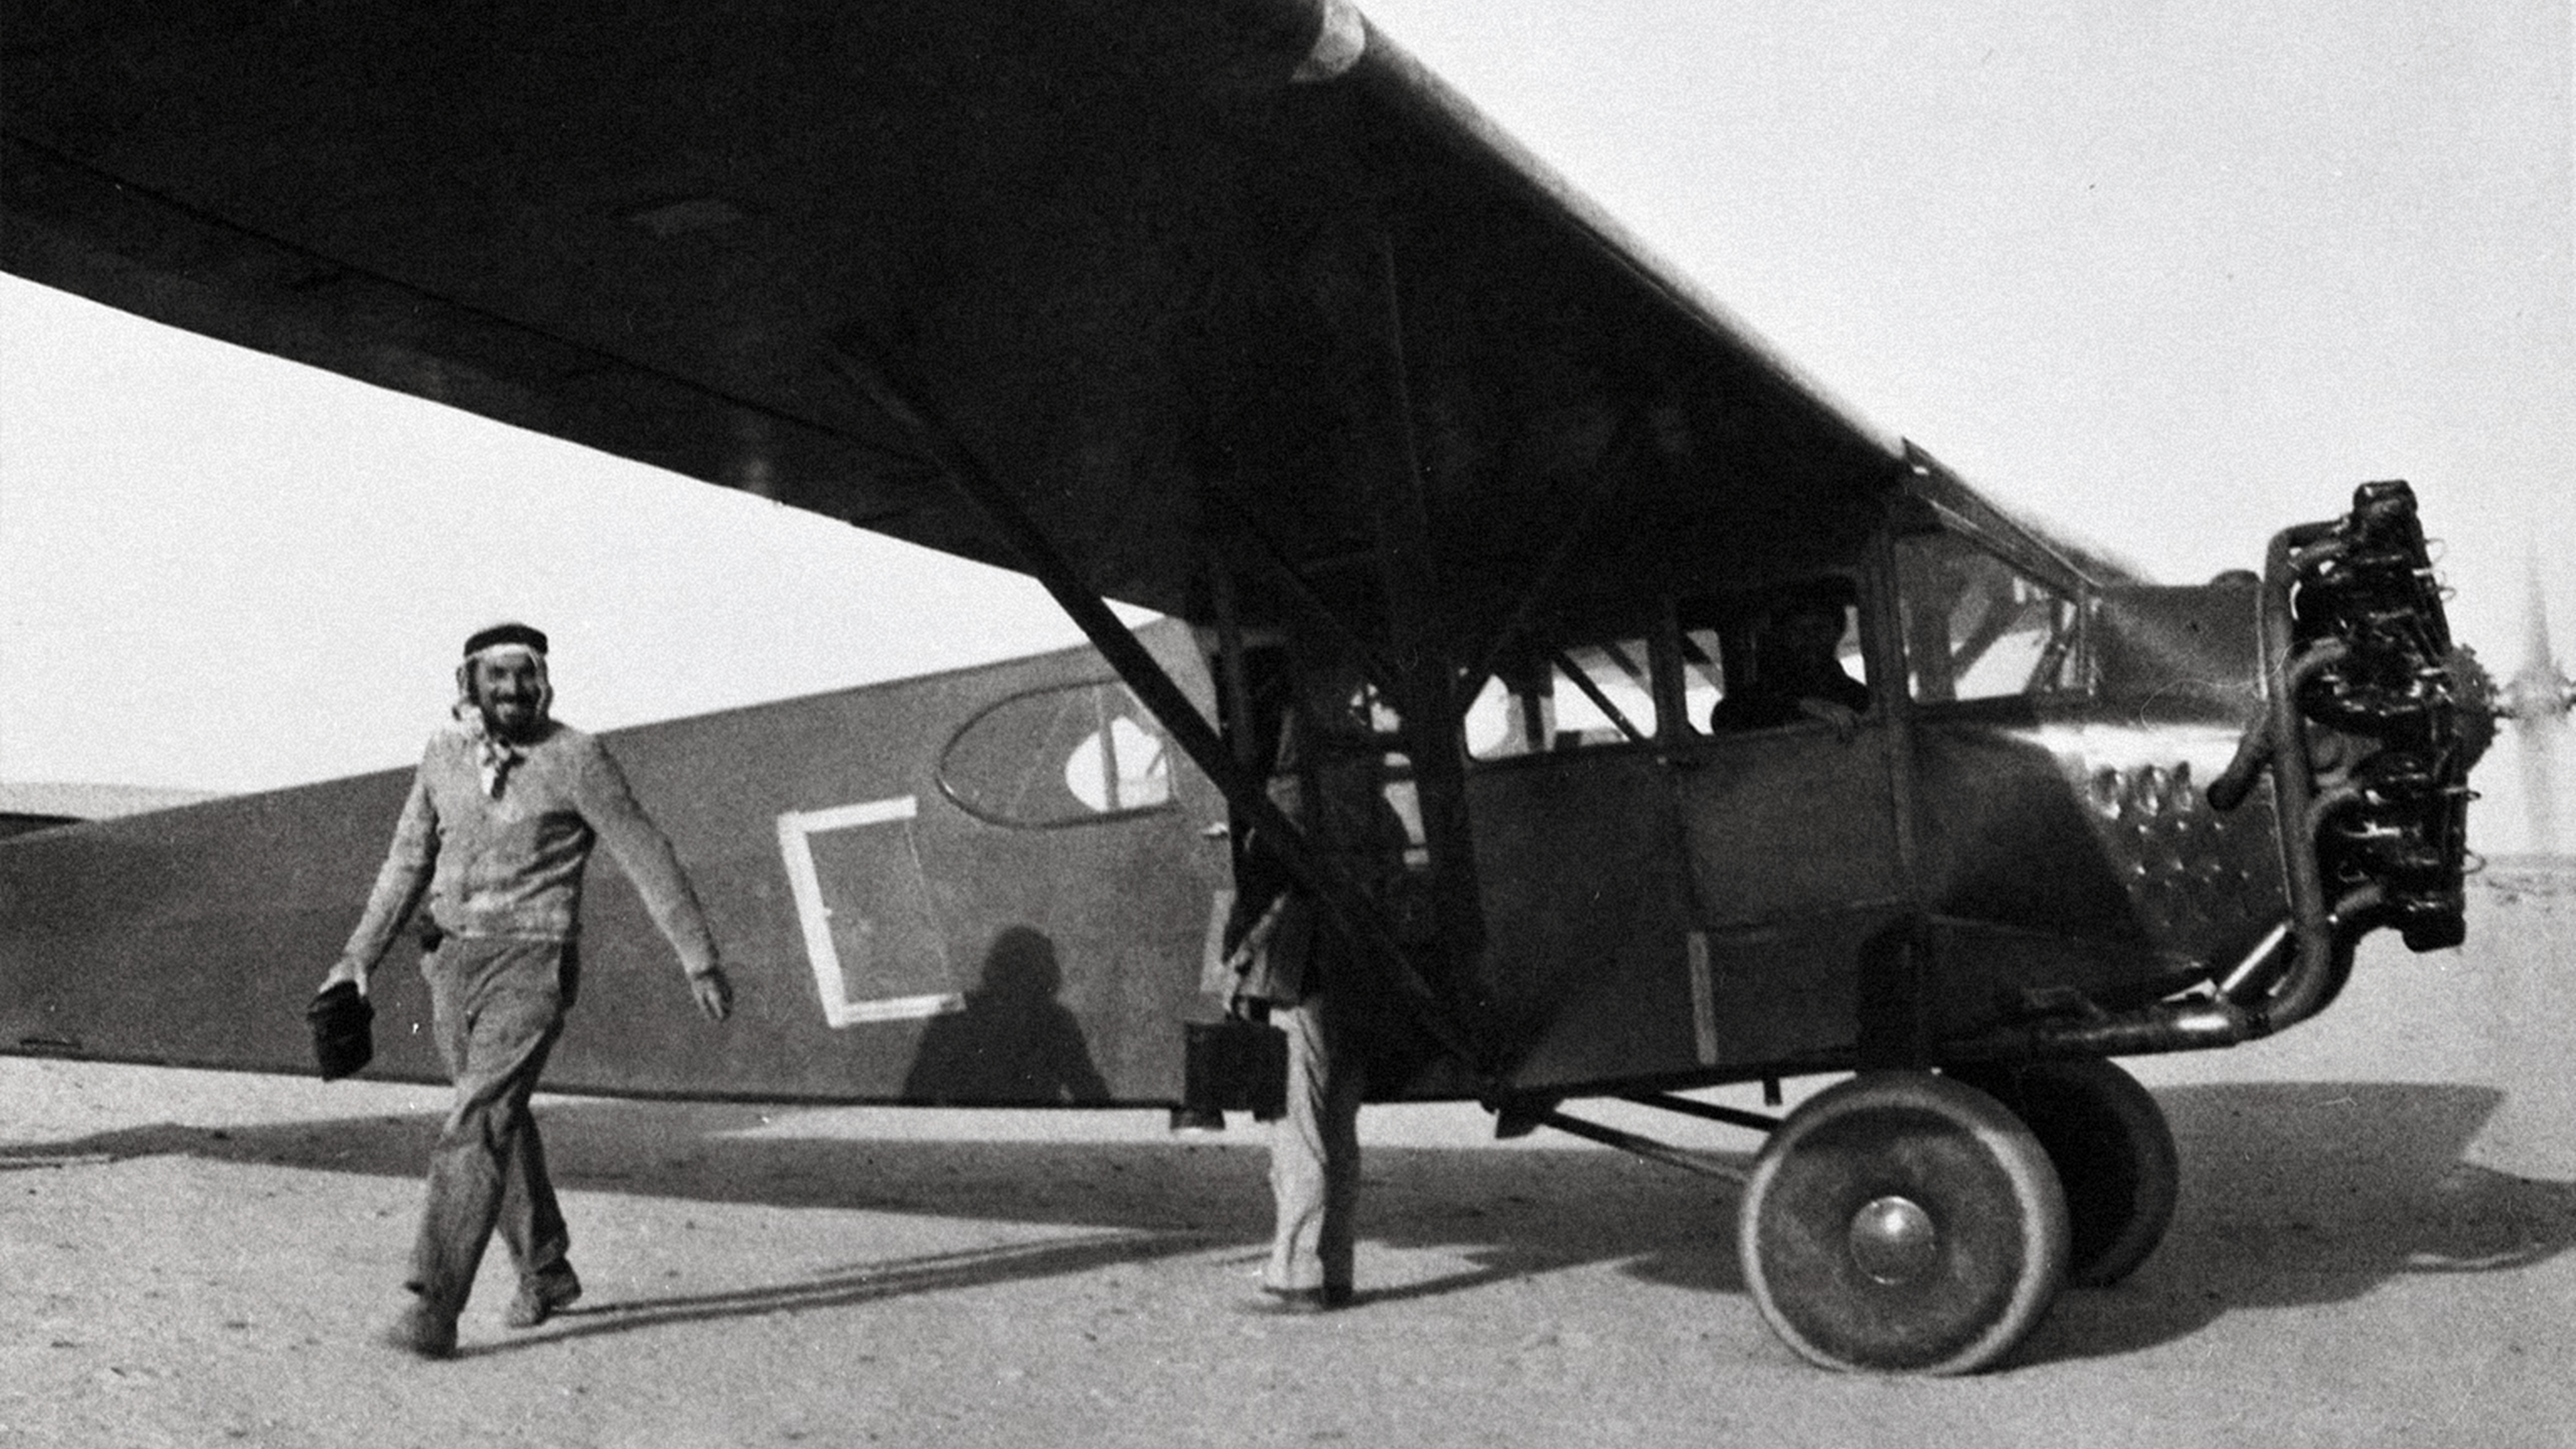 Person standing next to a Mukamalah airplane in the Saudi Arabian desert